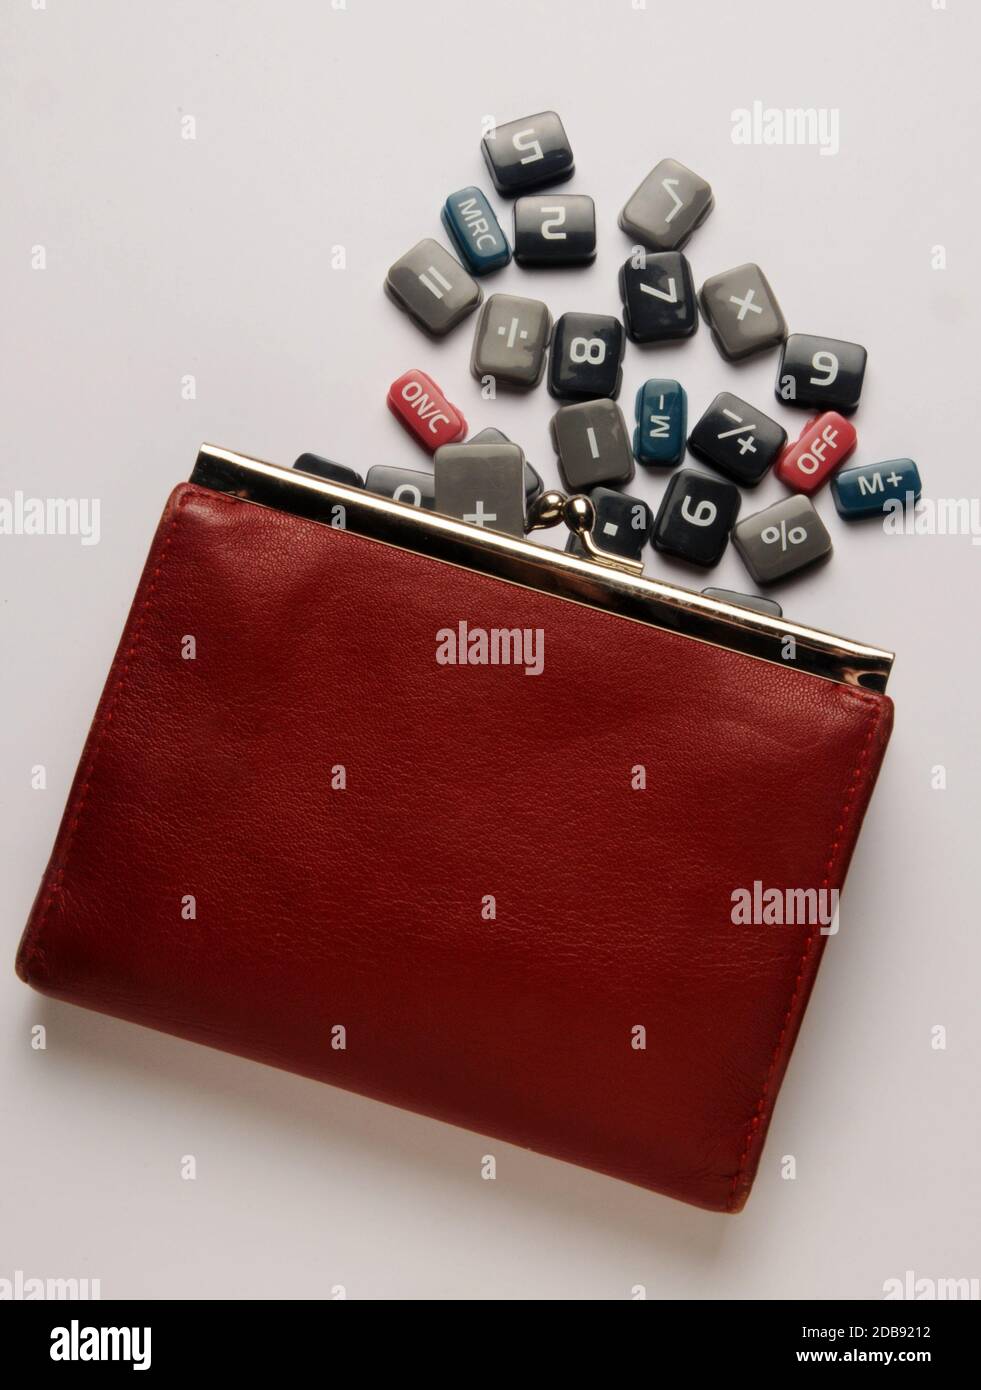 Women's purse with calculator keys Stock Photo